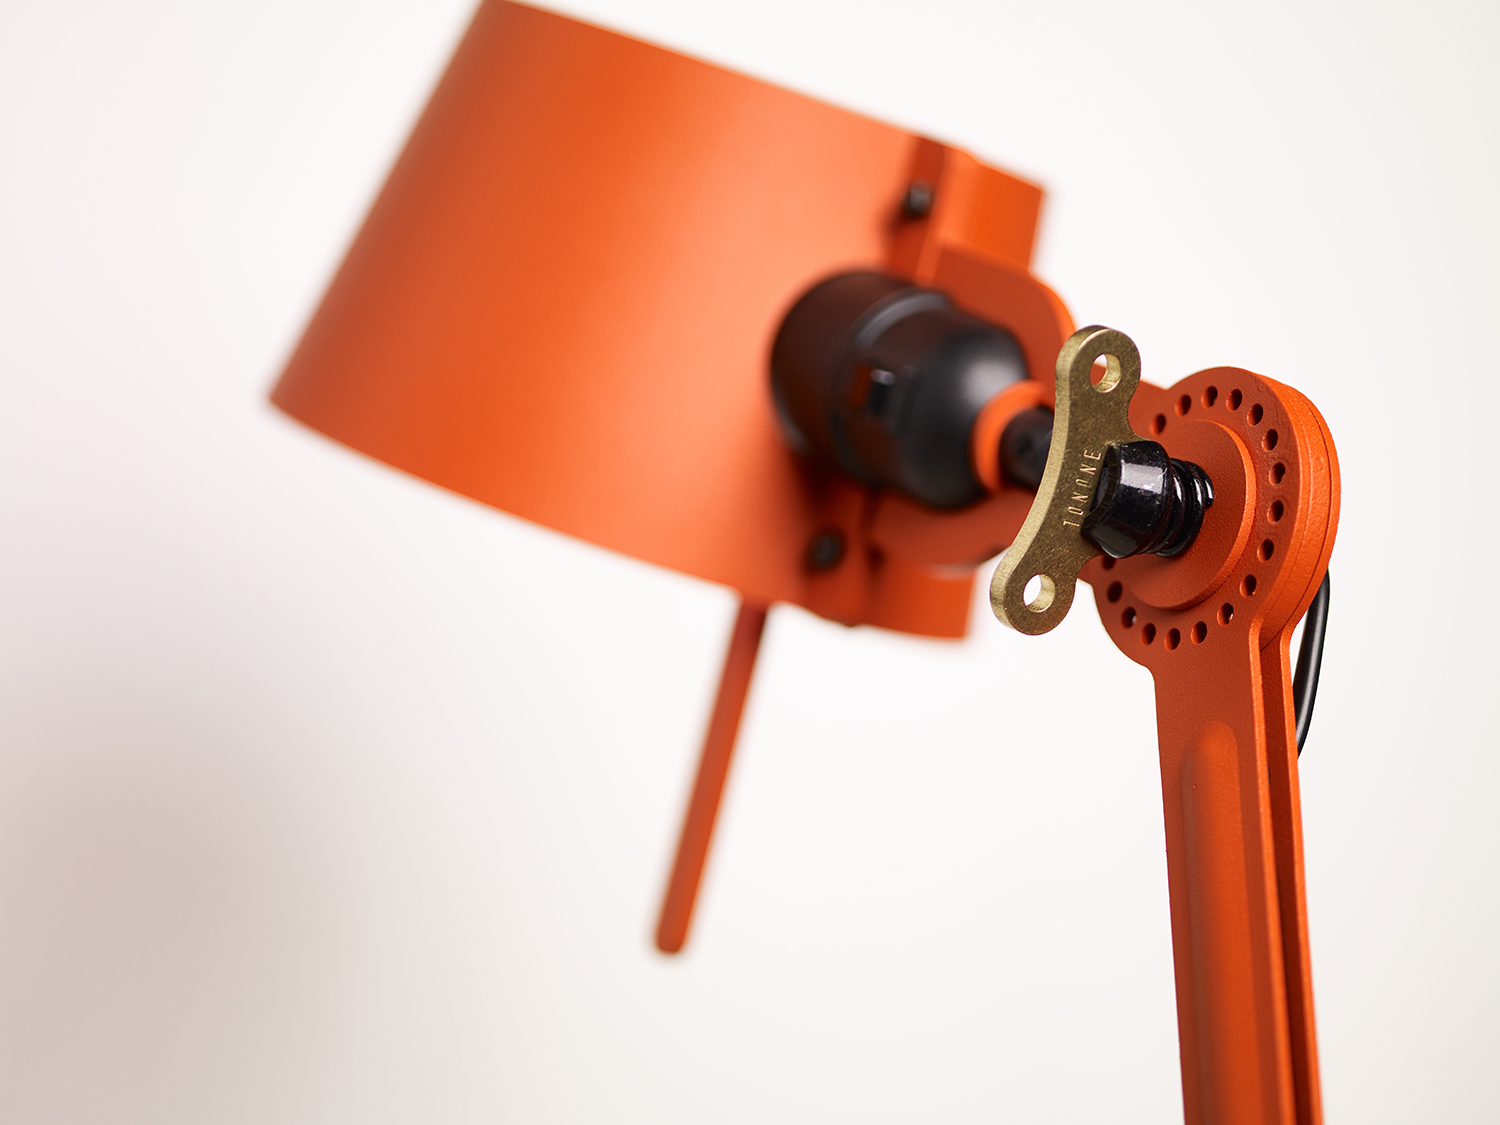 Design wandlamp oranje Striking Orange Wingnut